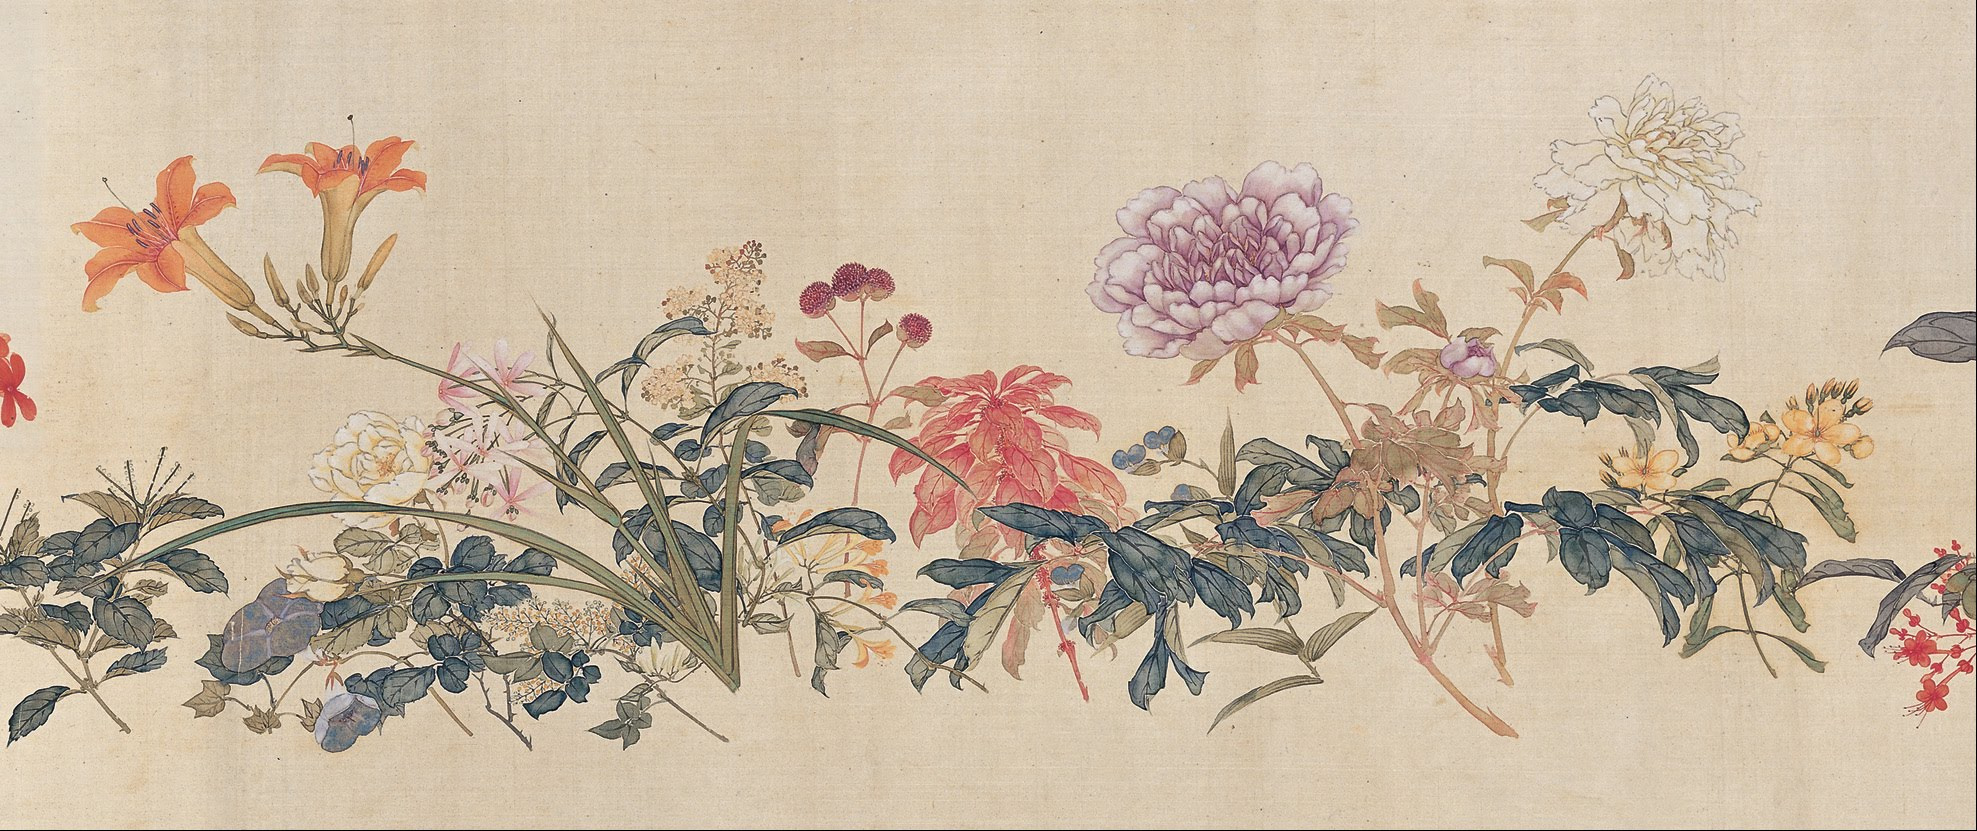 https://upload.wikimedia.org/wikipedia/commons/4/4d/Ju_Lian_-_A_hundred_flowers_-_Google_Art_Project.jpg